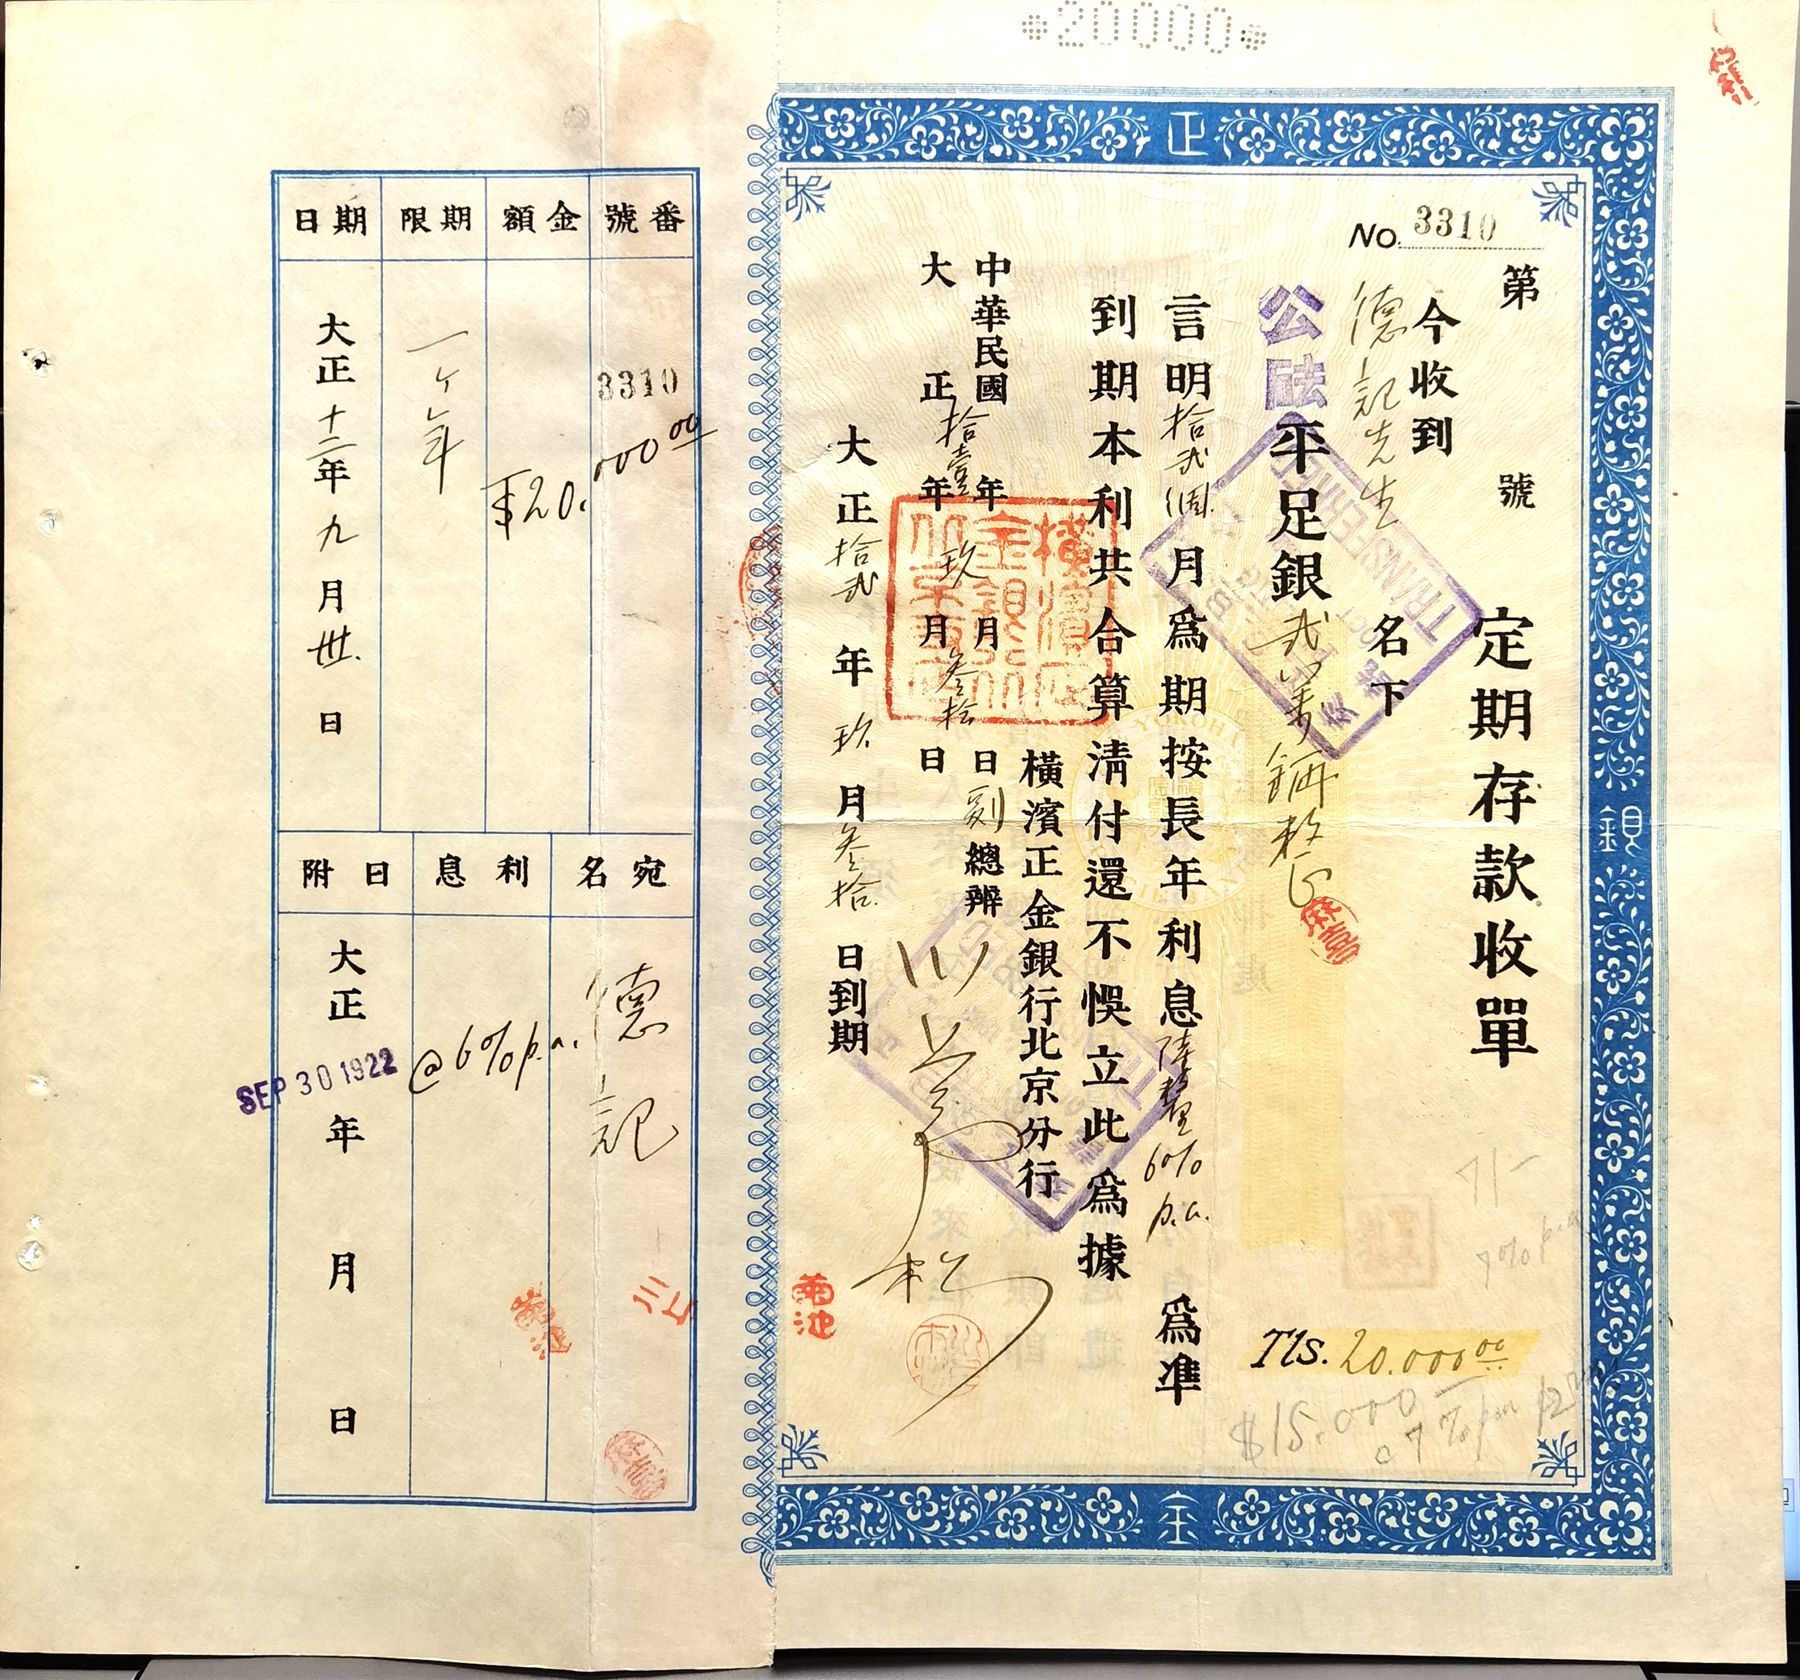 D3006, Fixed Deposit Receipt of Yokohama Special Bank, 1921 Beijing, China